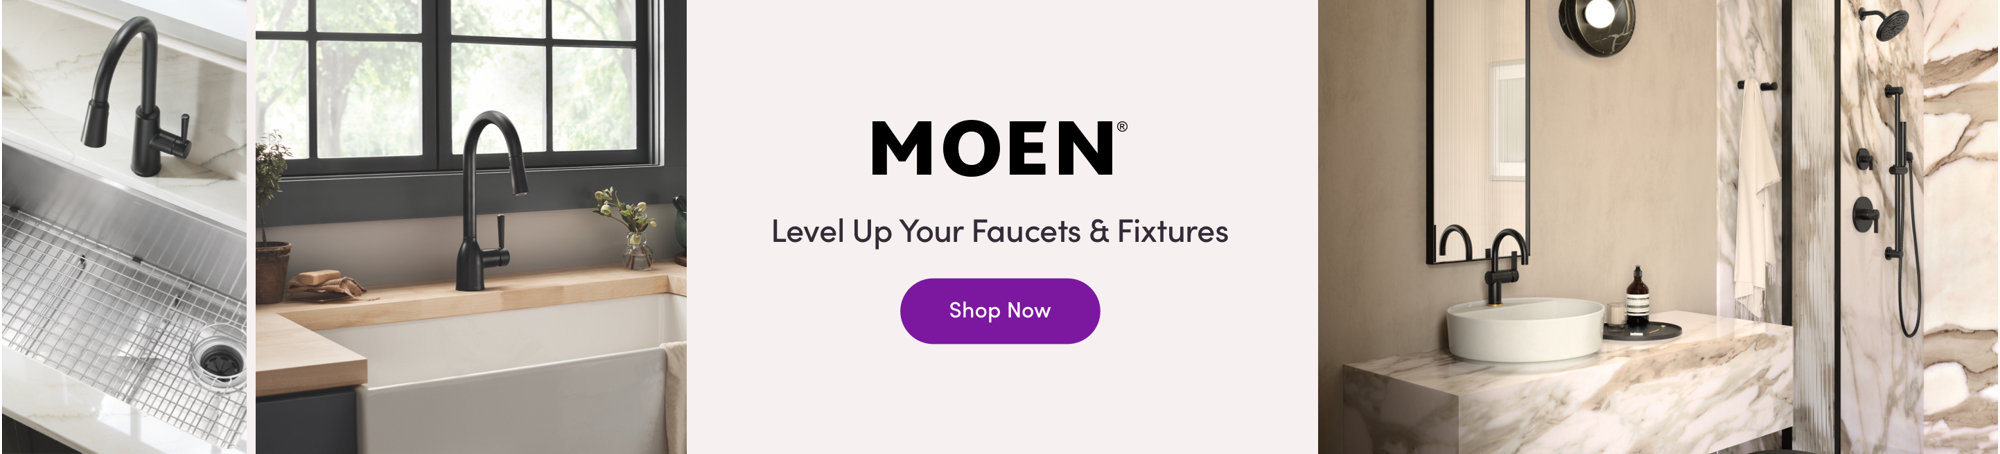 MOEN. Level Up Your Faucets & Fixtures. Shop Now.